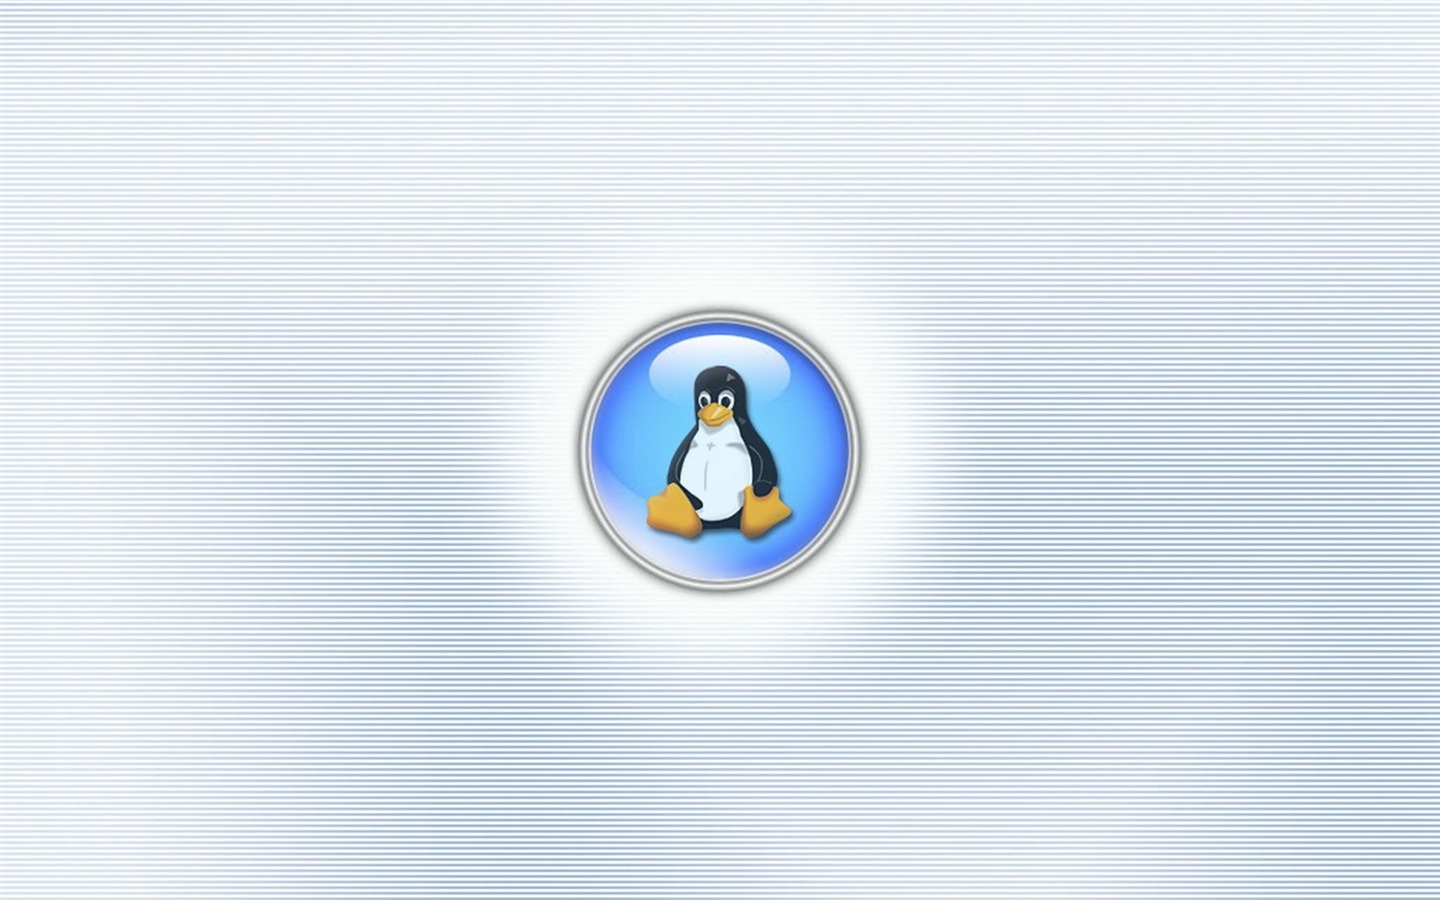 Linux 主題壁紙(一) #17 - 1440x900